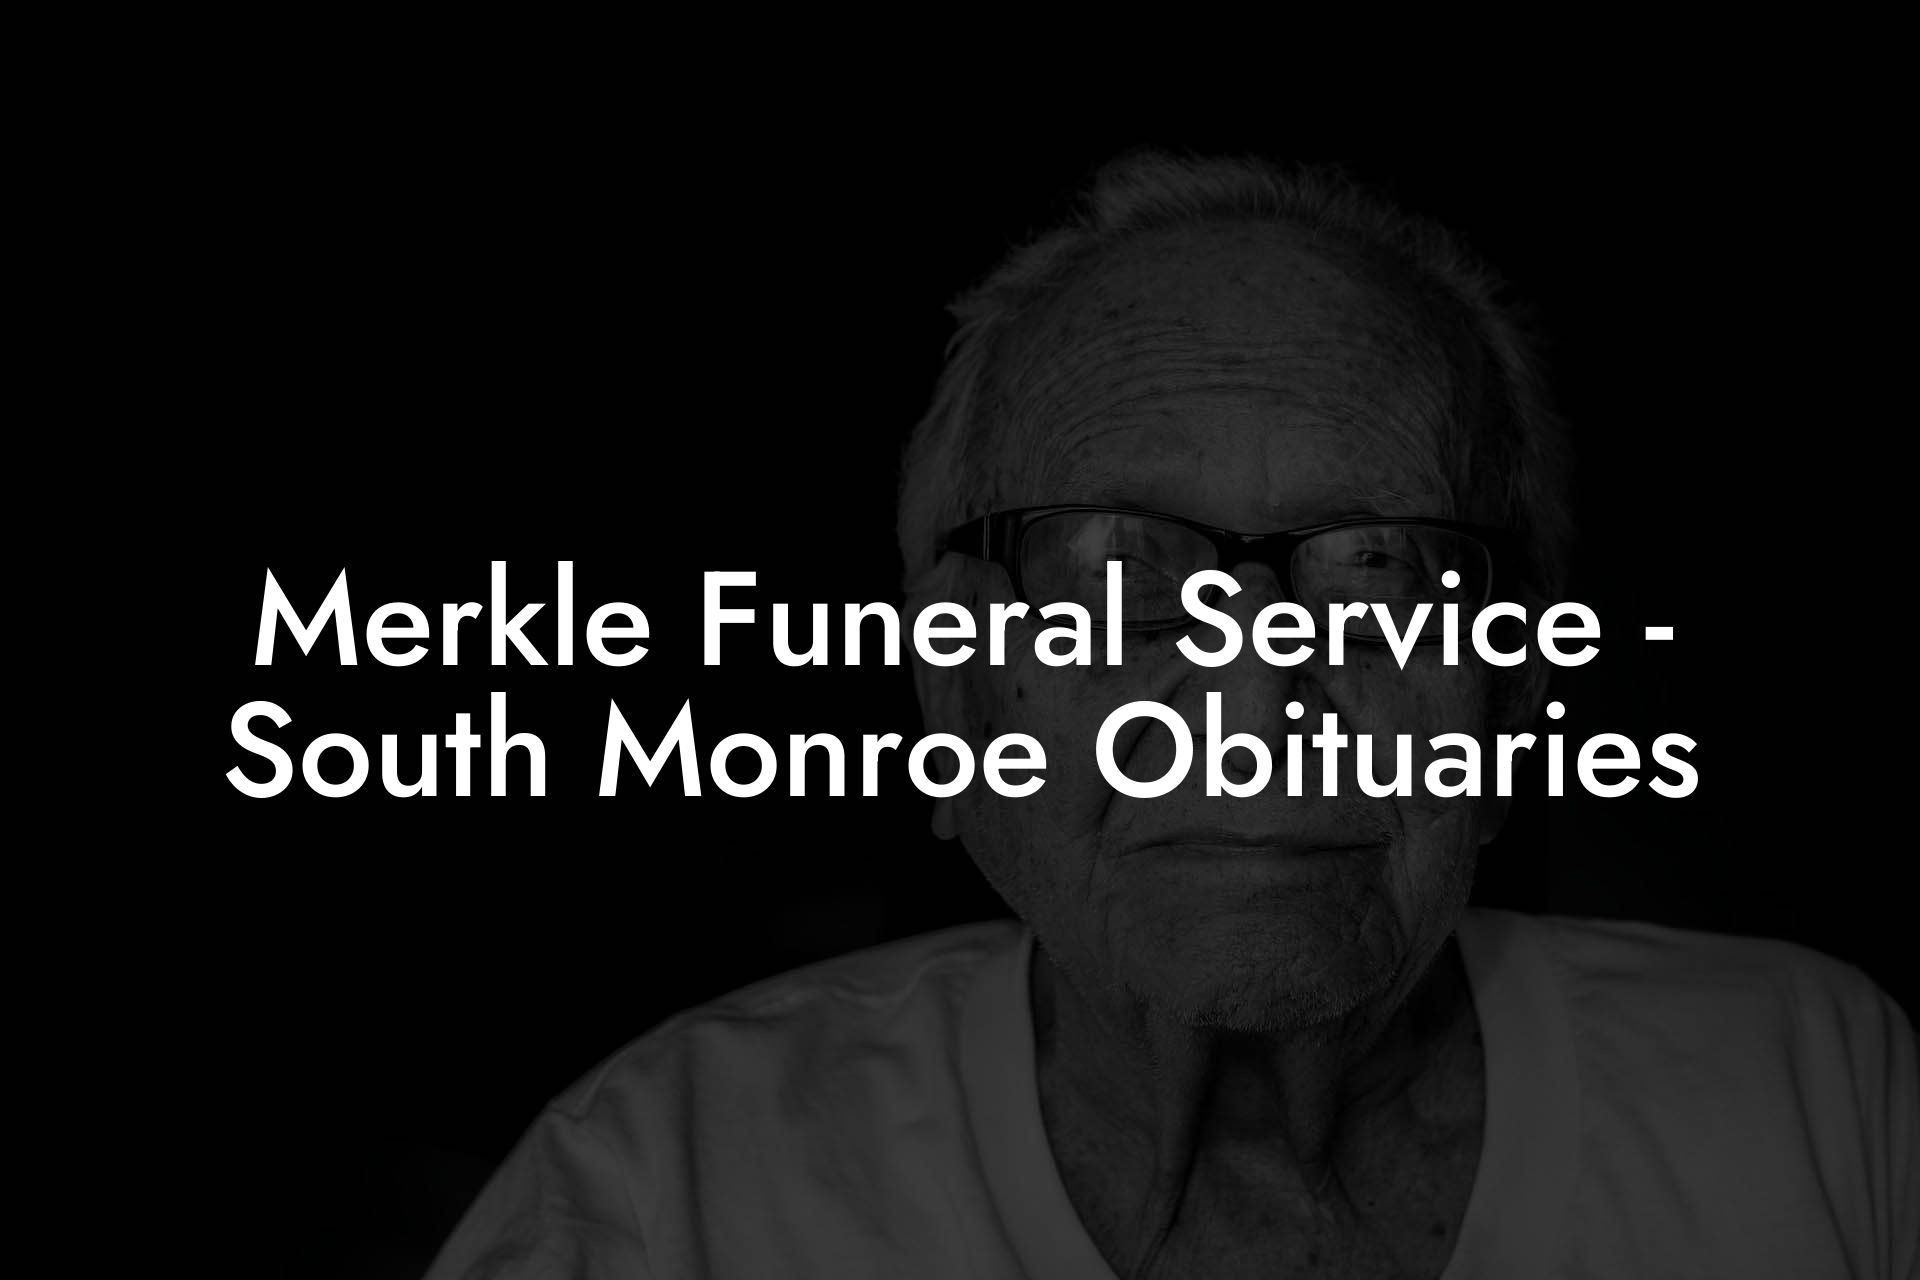 Merkle Funeral Service - South Monroe Obituaries